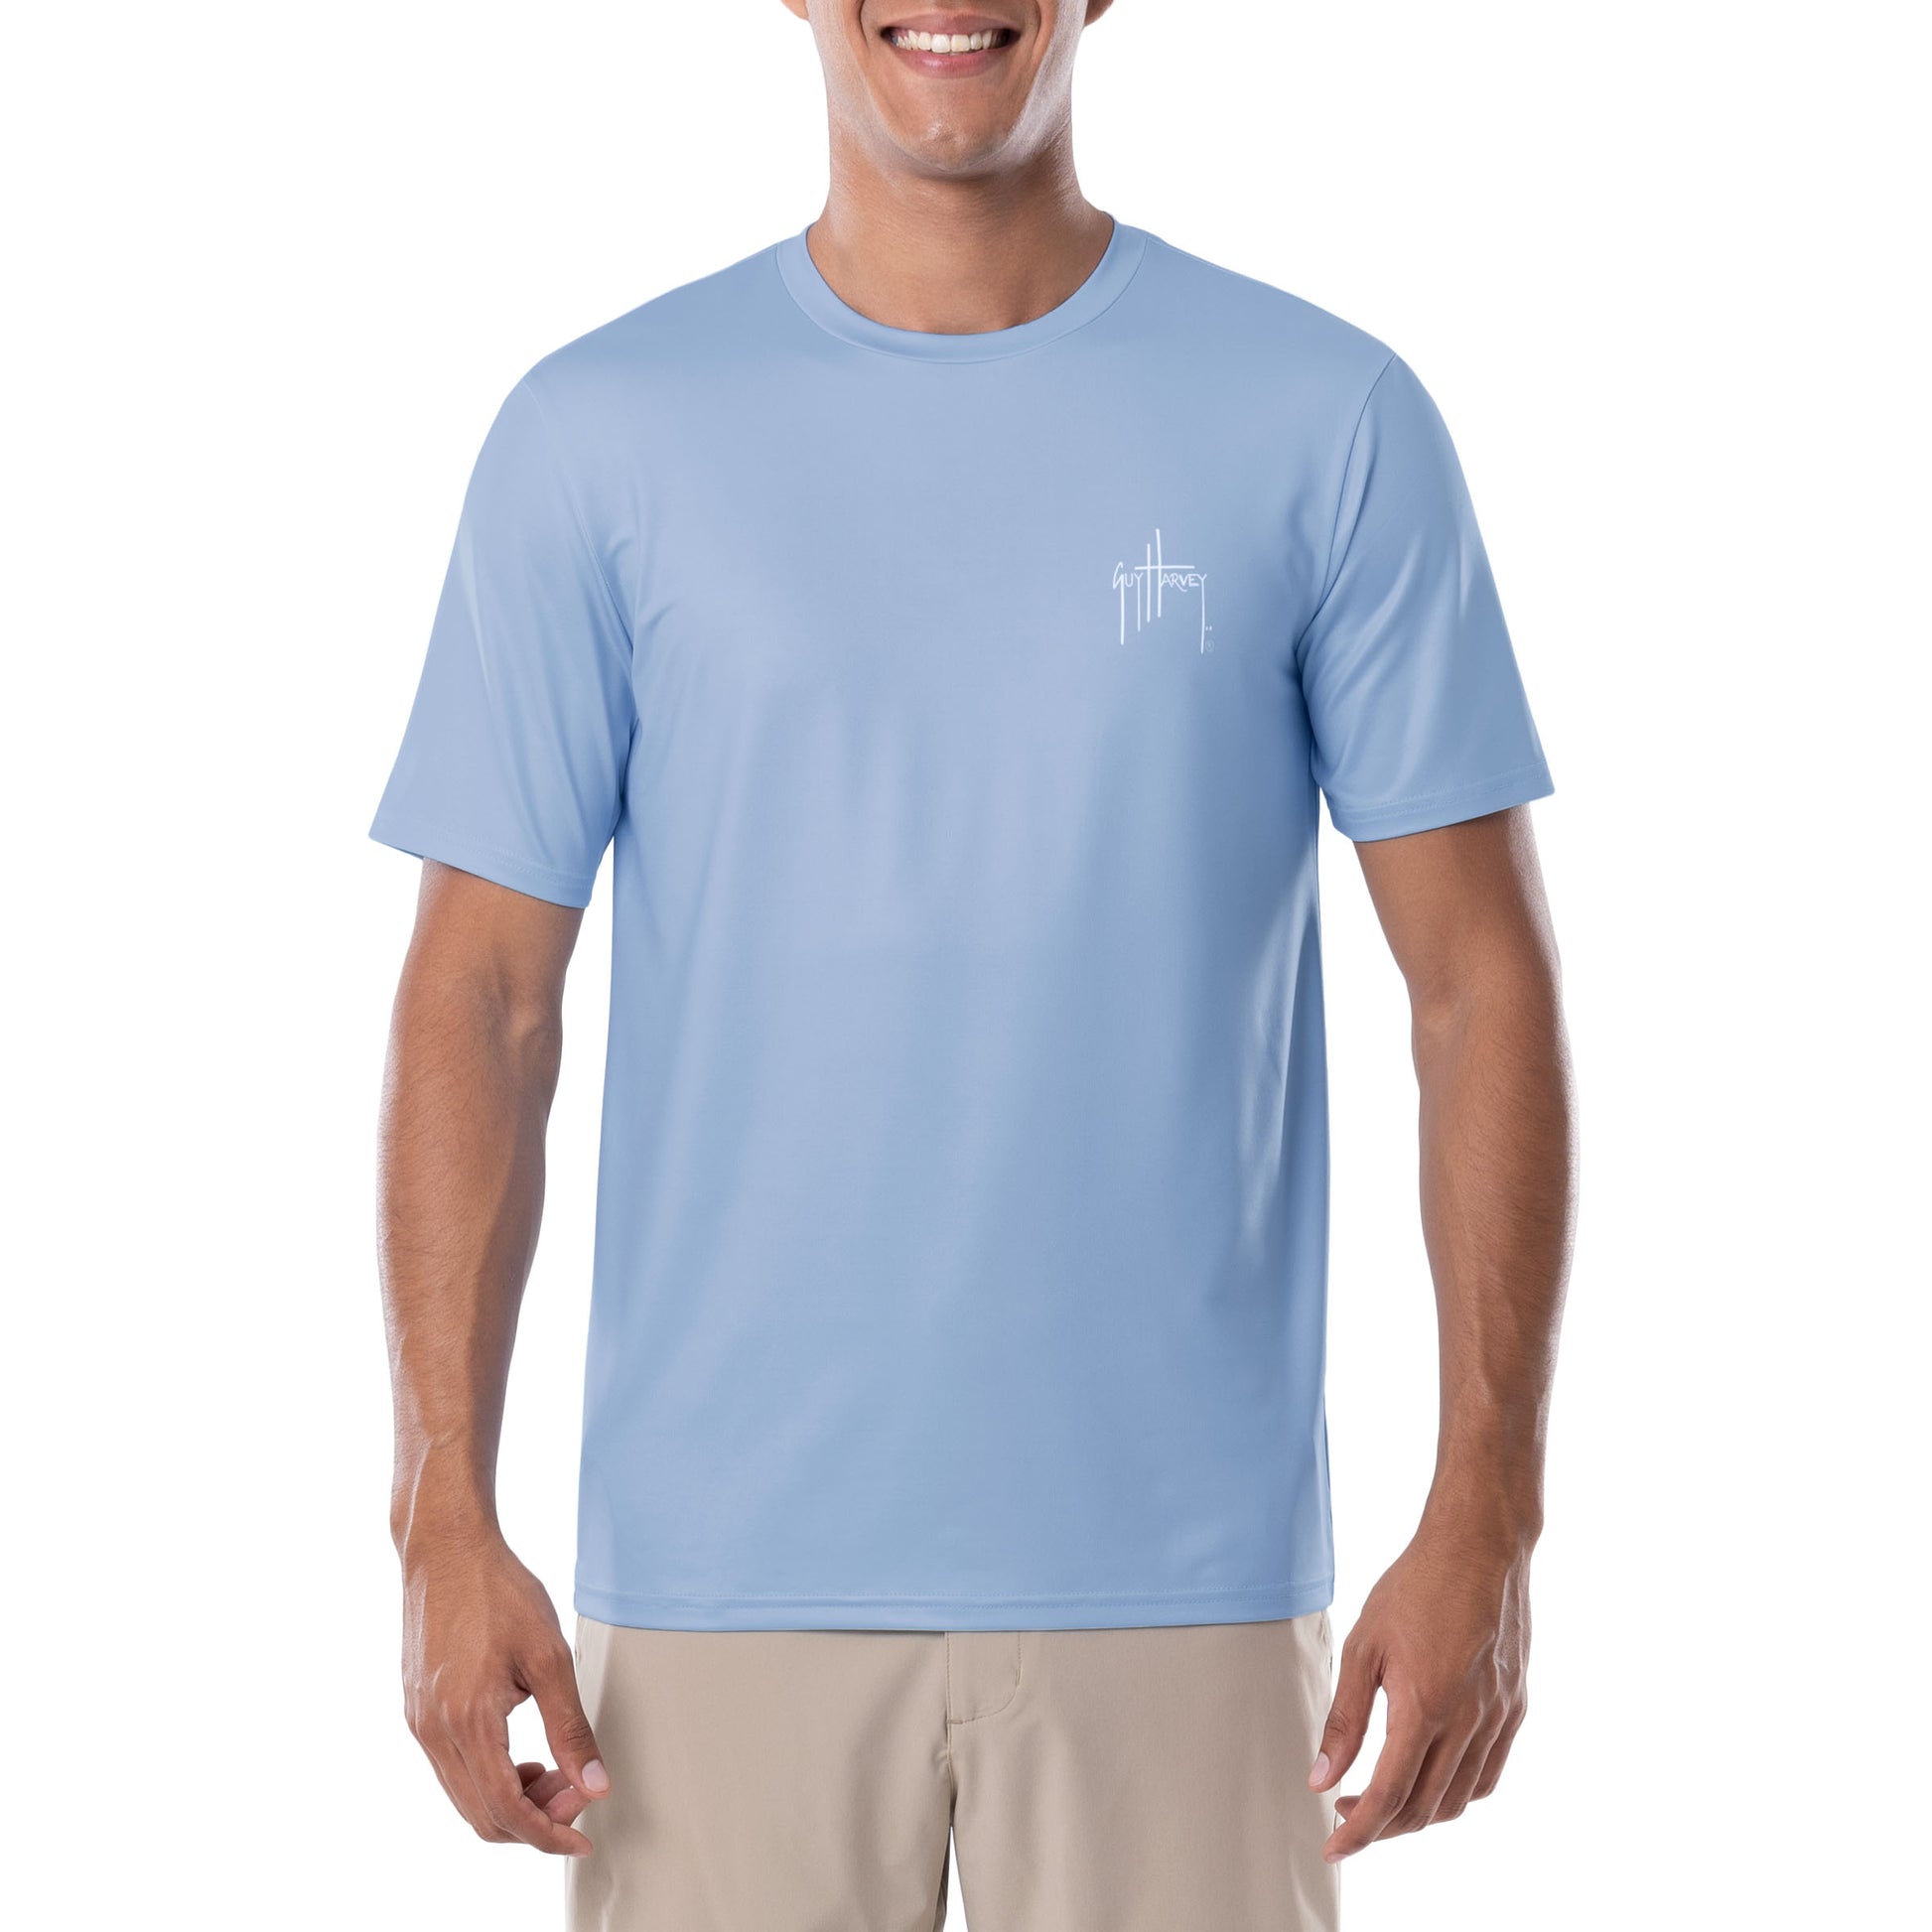 Men's Sailfish Americana Short Sleeve Performance Shirt View 2